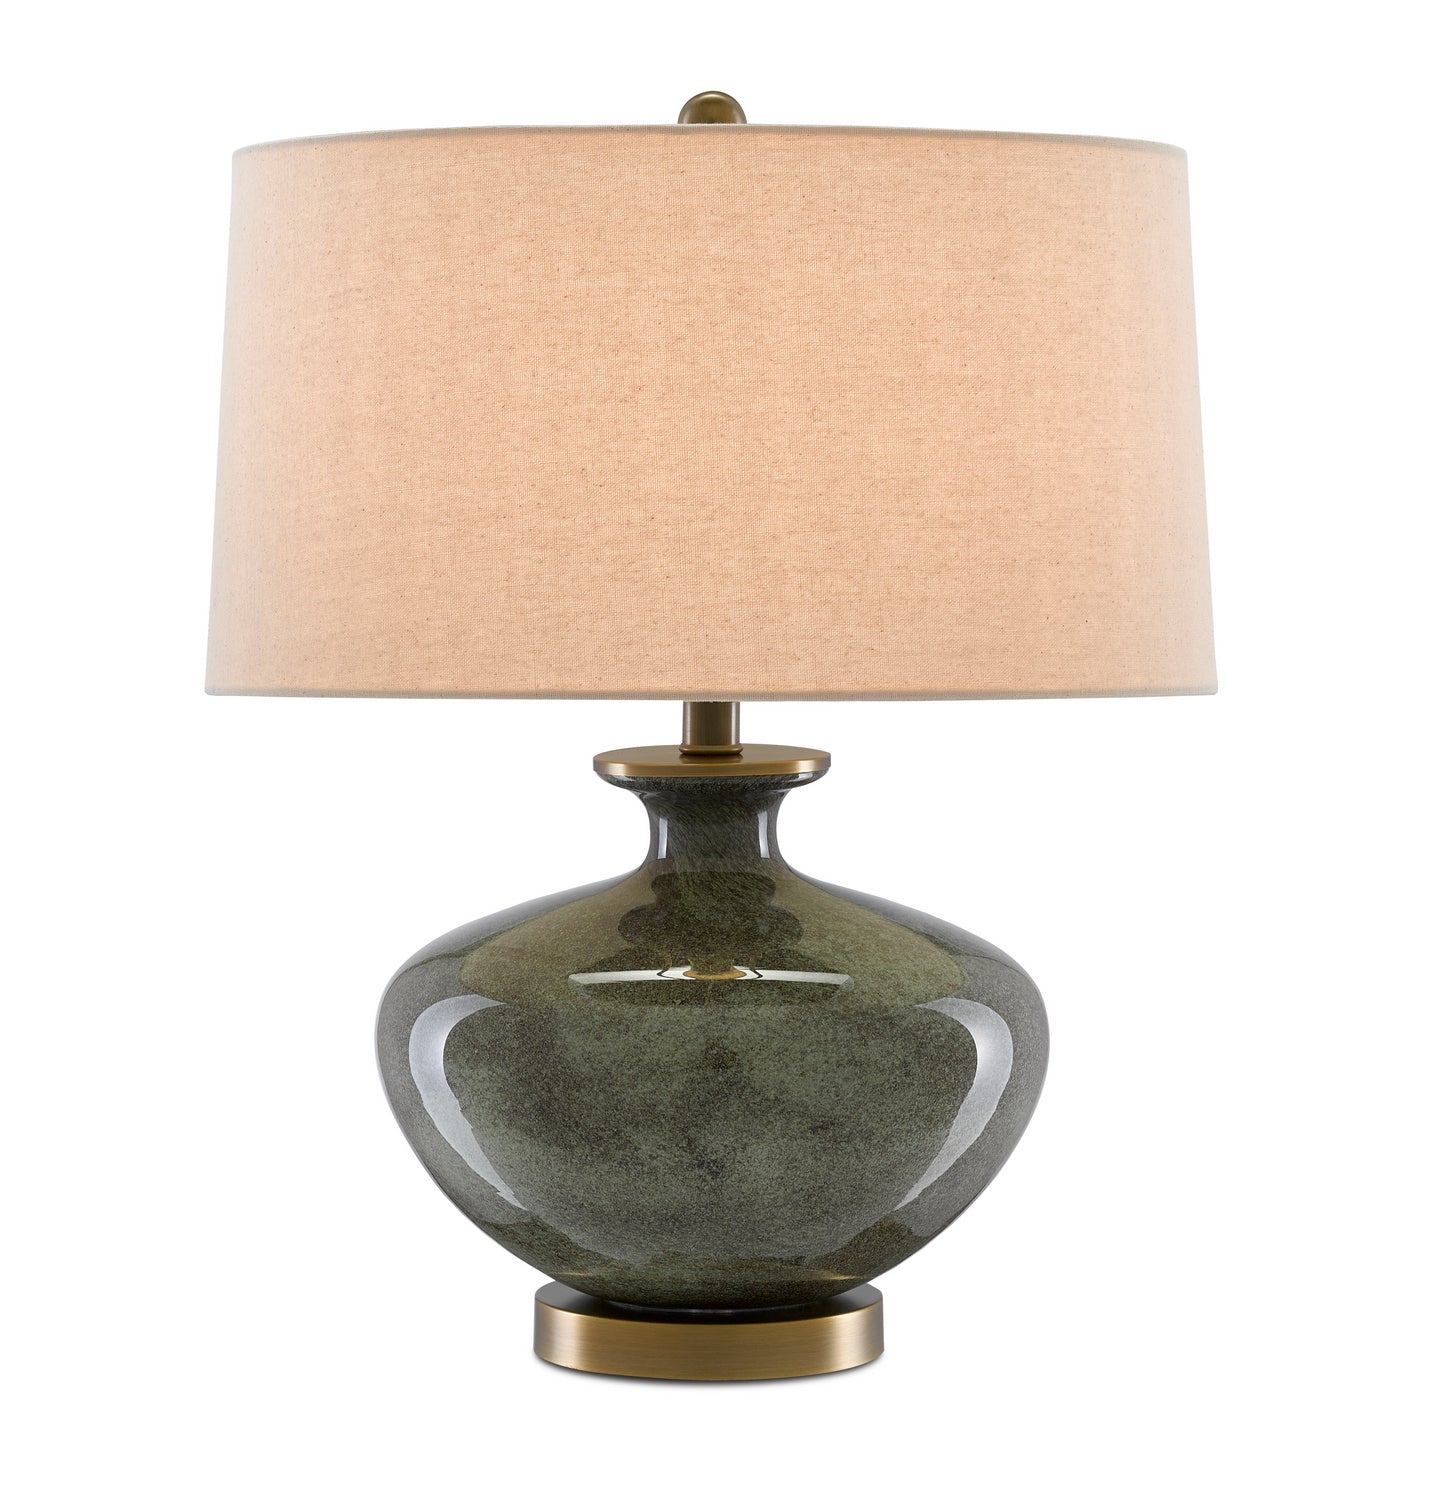 Currey and Company - One Light Table Lamp - Greenlea - Dark Gray/Moss Green/Antique Brass- Union Lighting Luminaires Decor